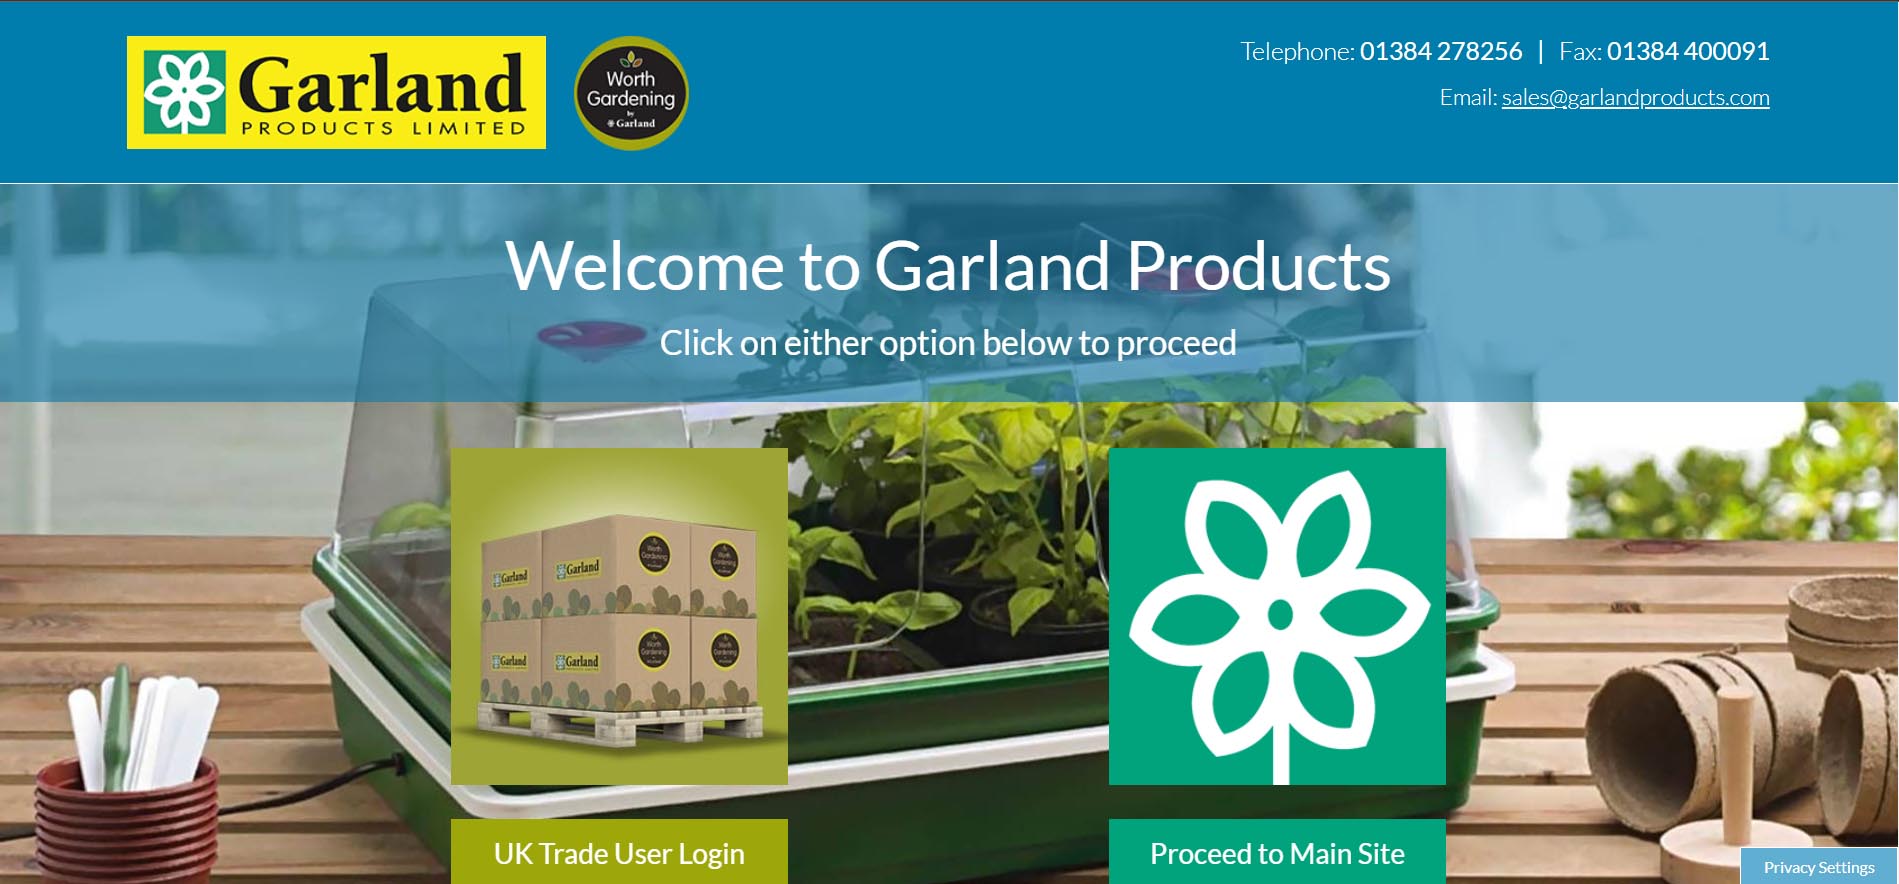 New Garland Website